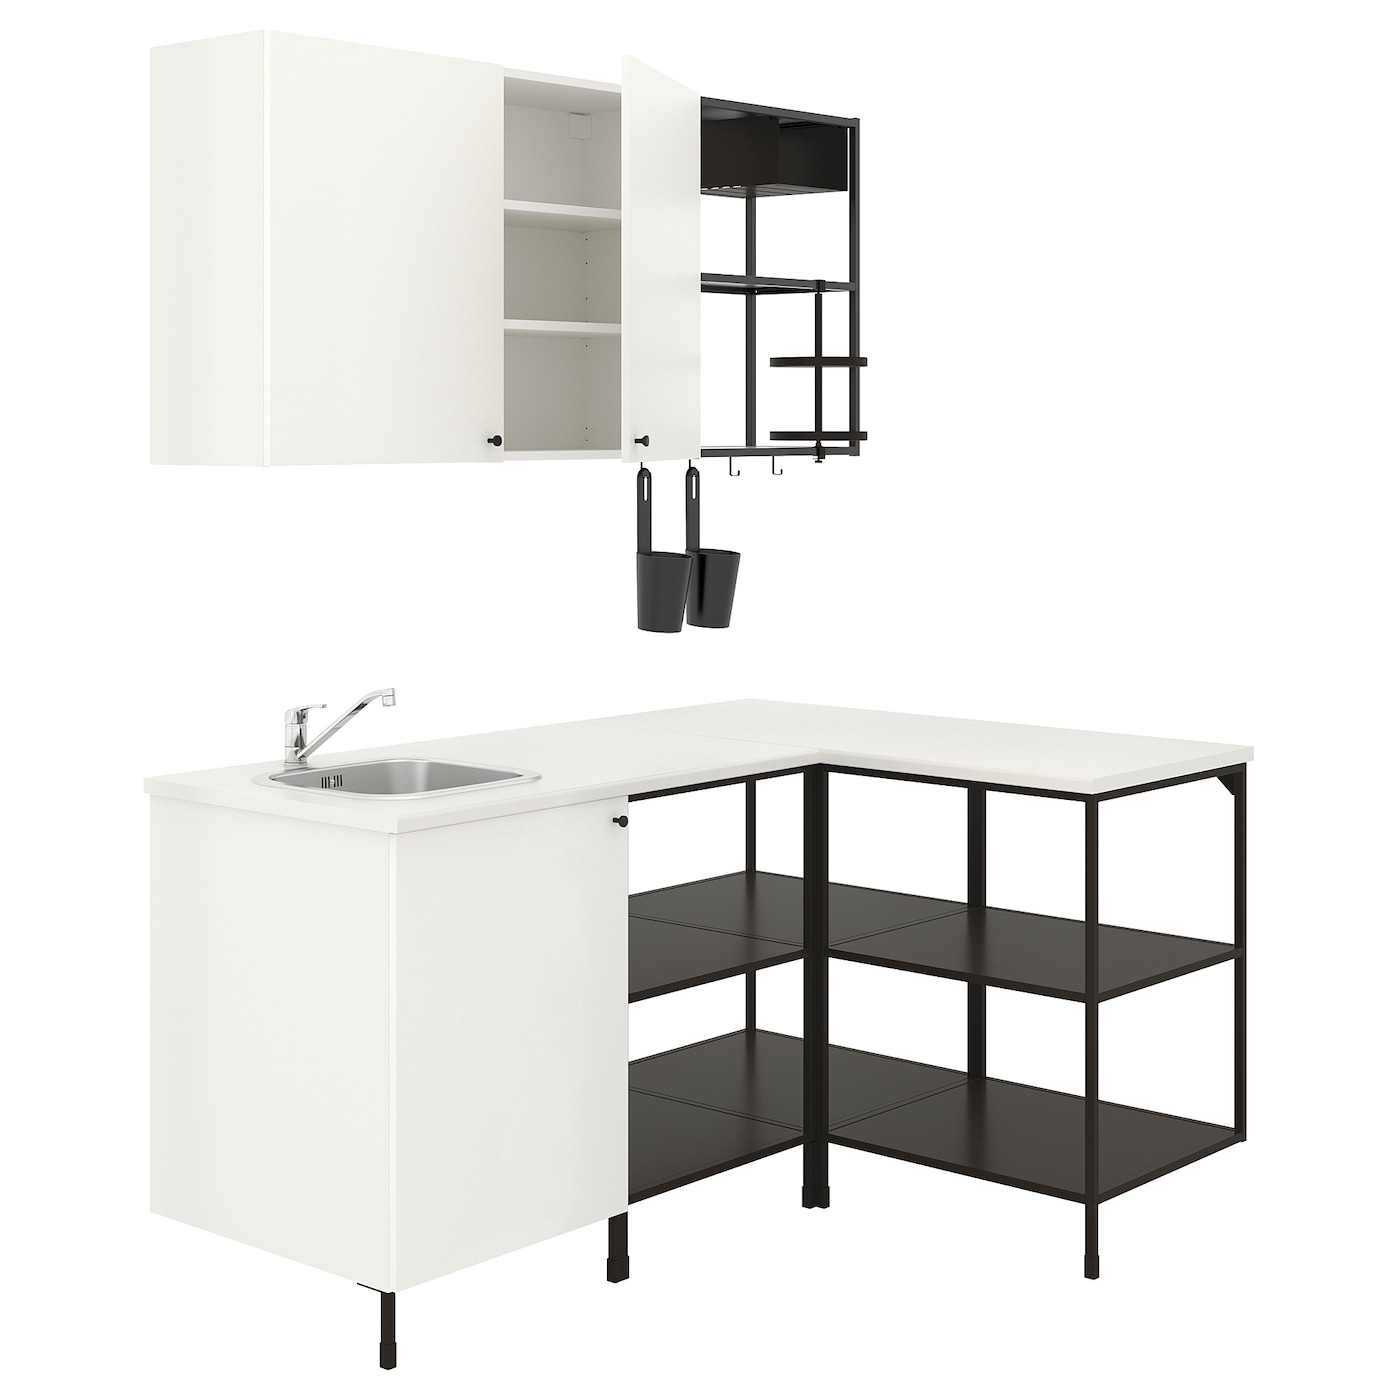 Угловая кухня -  ENHET  IKEA/ ЭНХЕТ ИКЕА, 181,5х75 см, белый/черный